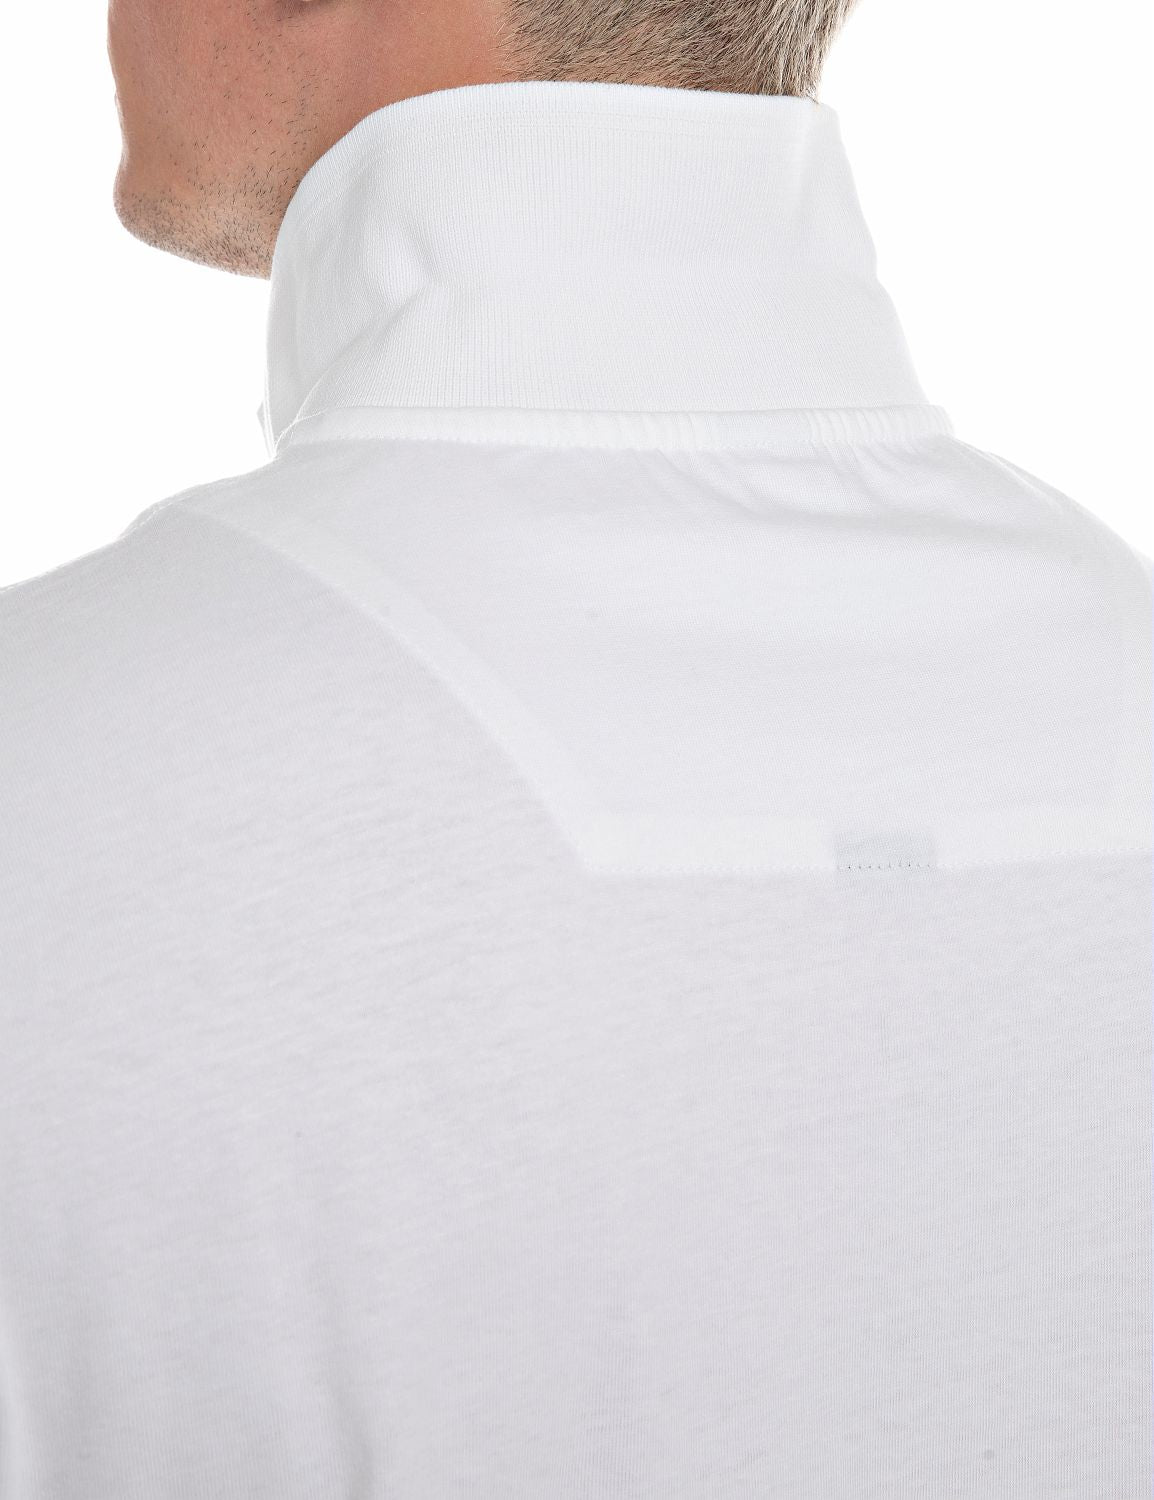 Replay White Polo T-Shirt